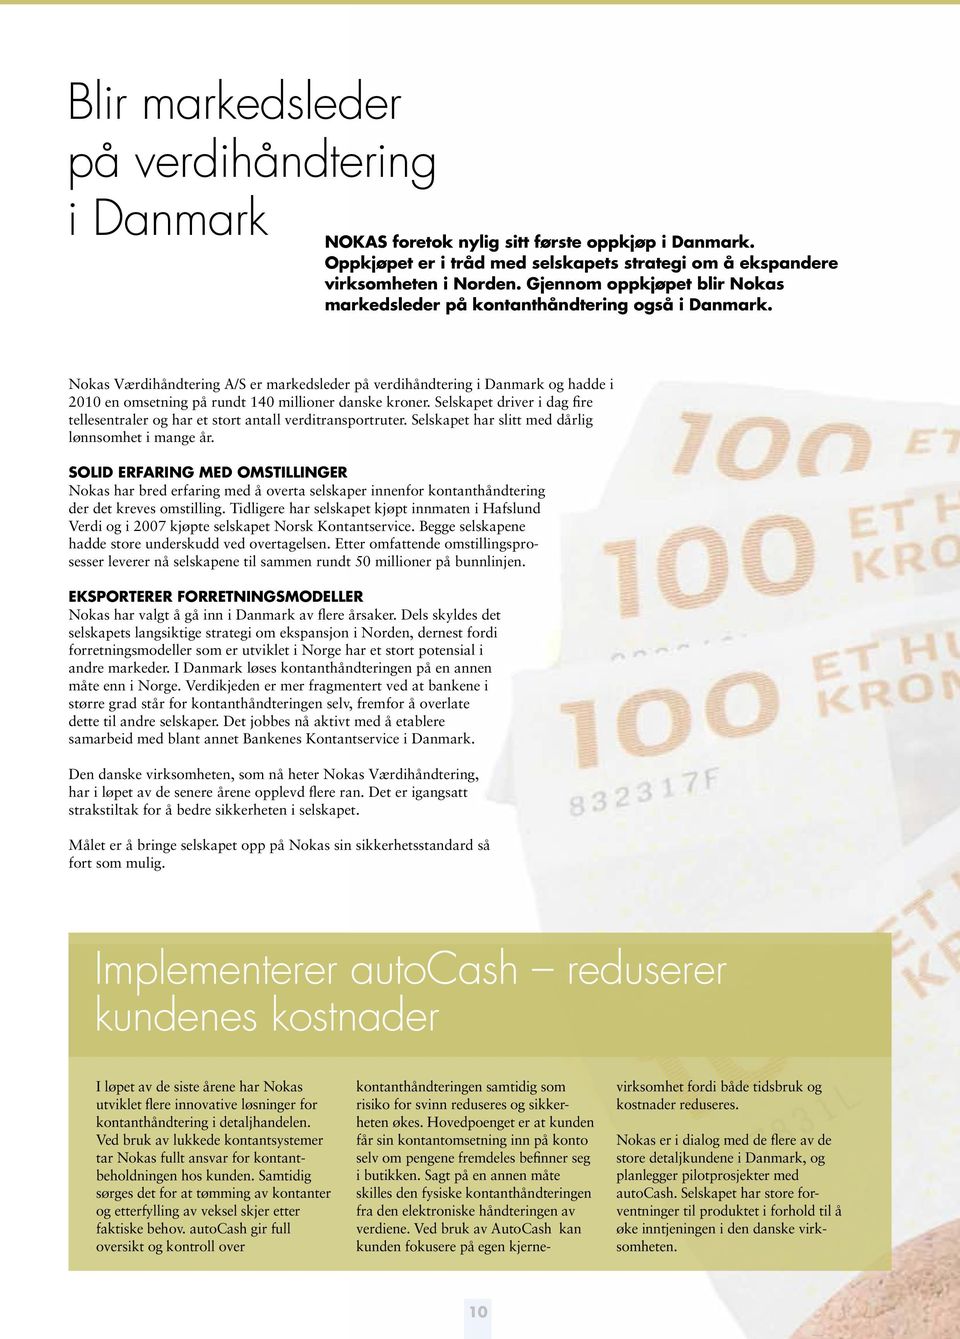 Nokas Værdihåndtering A/S er markedsleder på verdihåndtering i Danmark og hadde i 2010 en omsetning på rundt 140 millioner danske kroner.